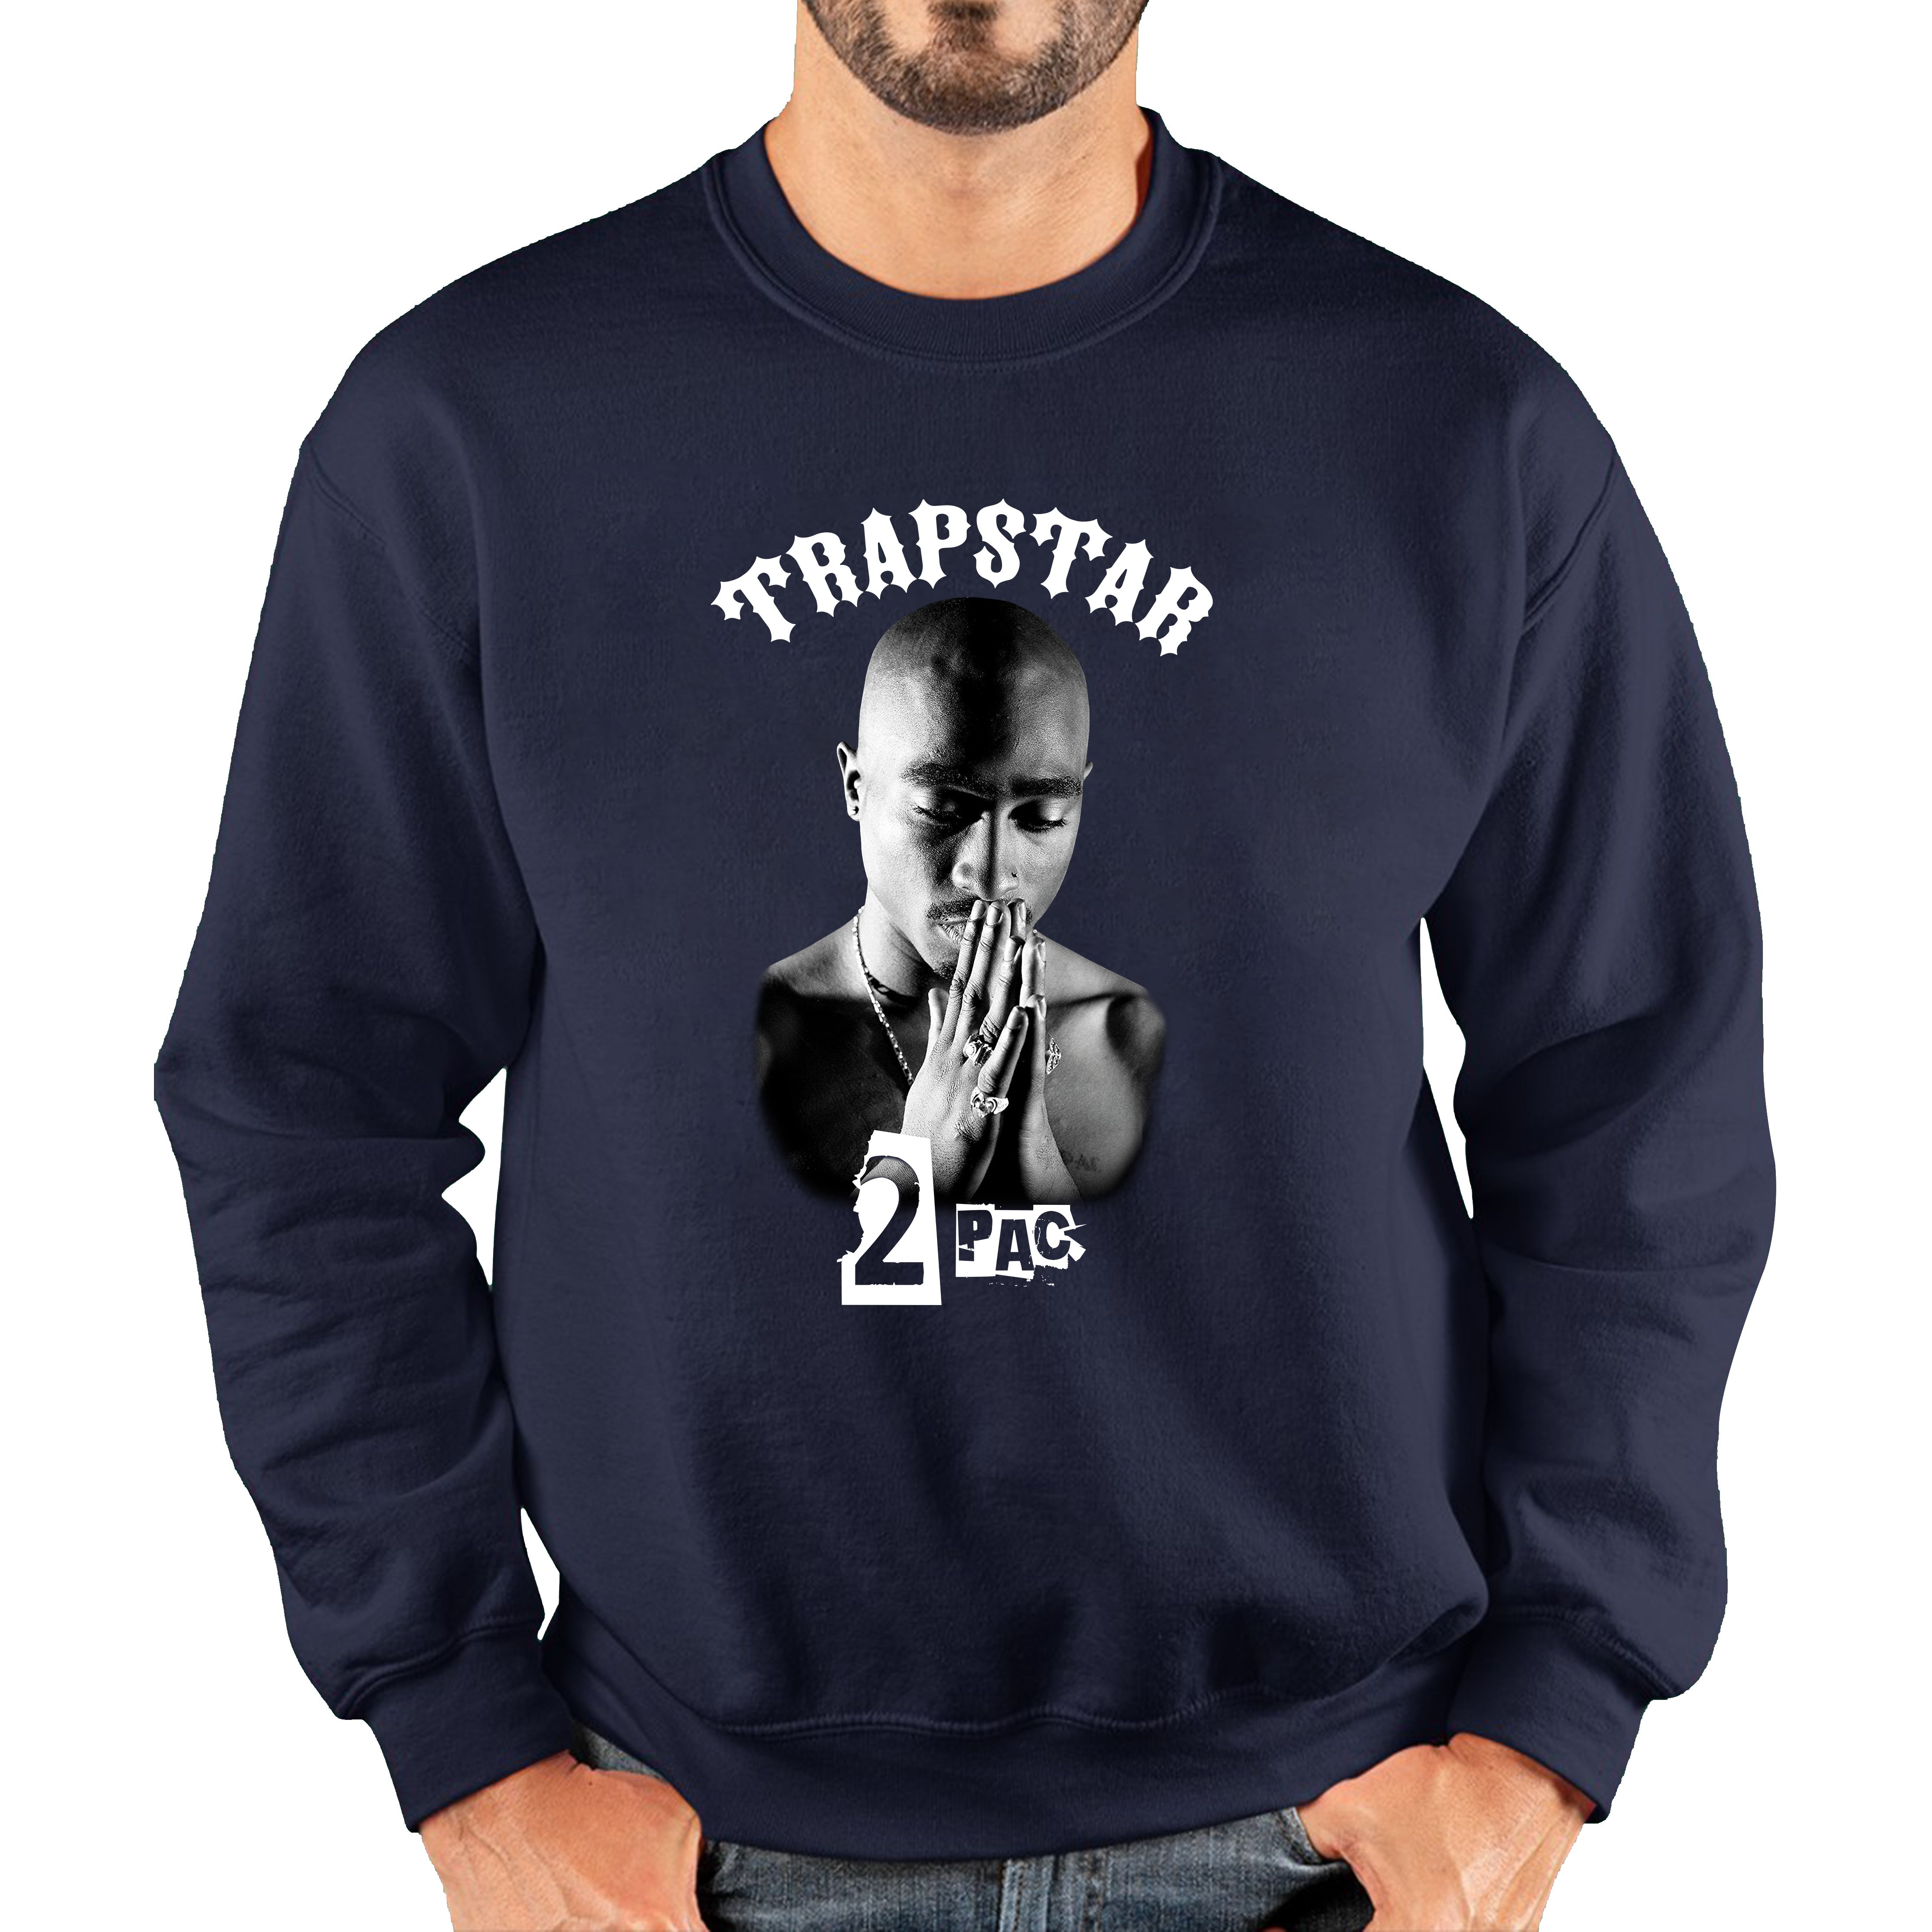 Trapstar 2pac Jumper Tupac Shakur American Rapper Hip Hop Lovers Music Gift Mens Sweatshirt